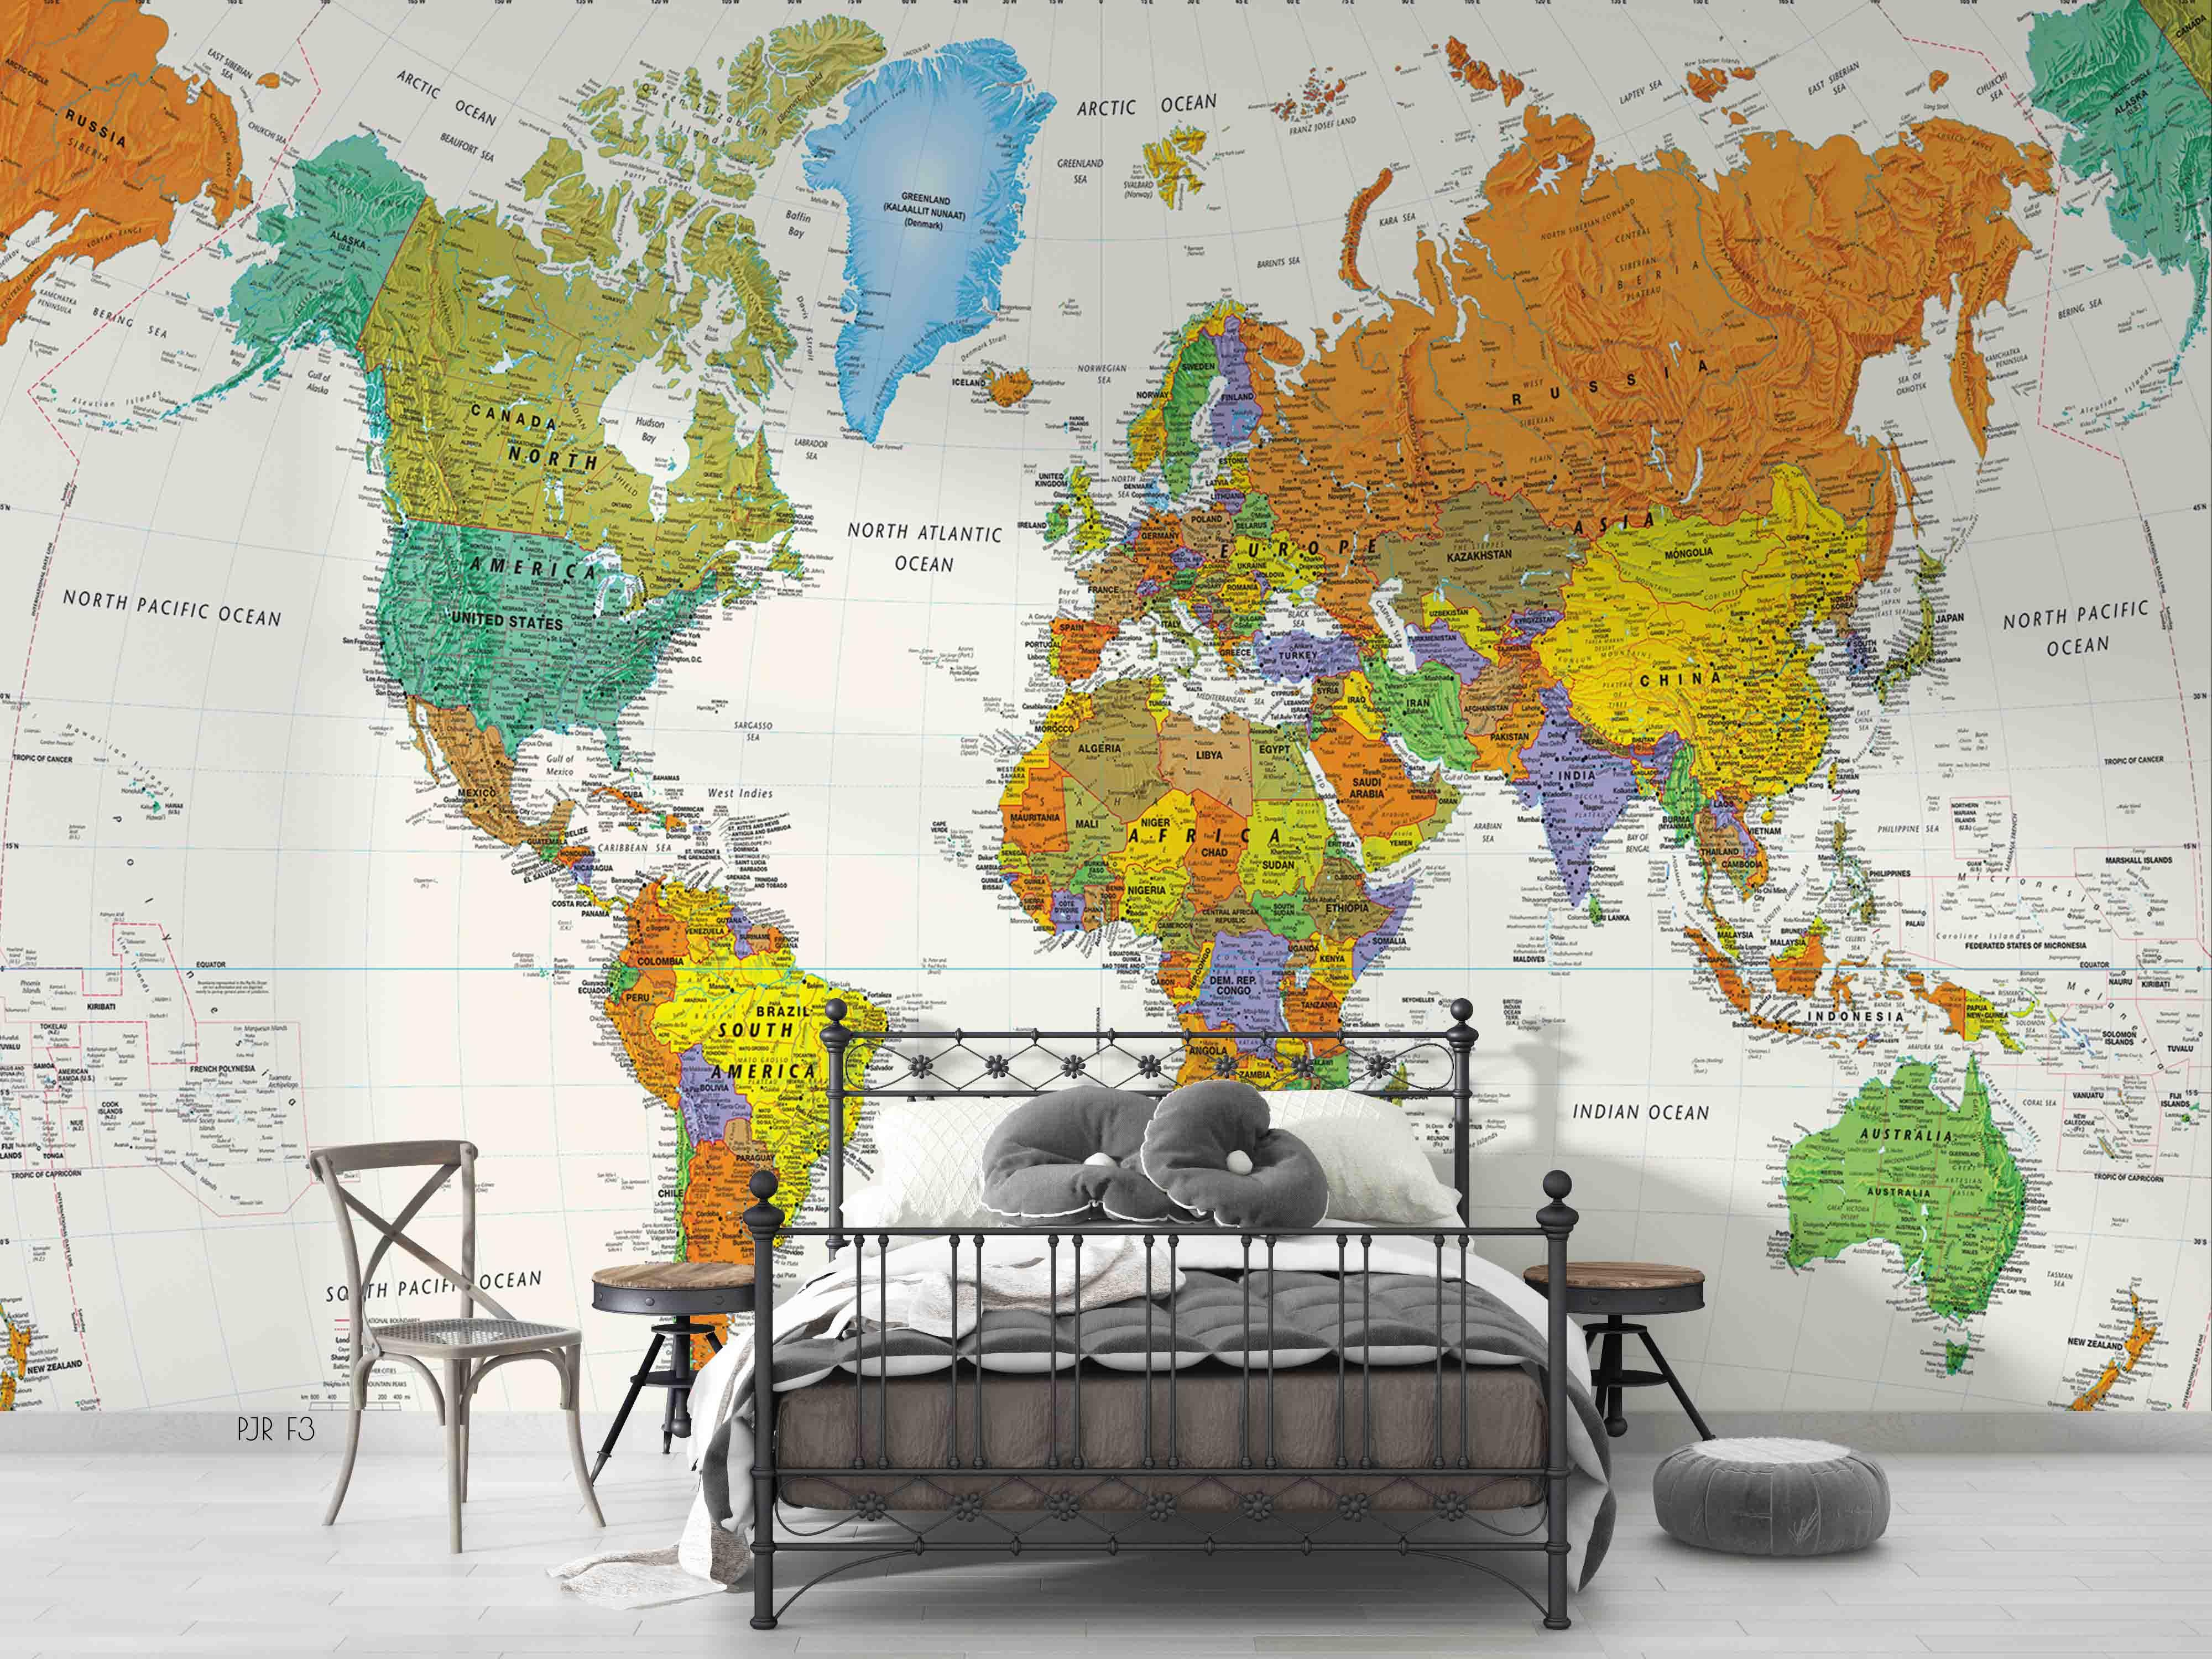 3D Color World Map Wall Mural Wallpaper LQH 71- Jess Art Decoration